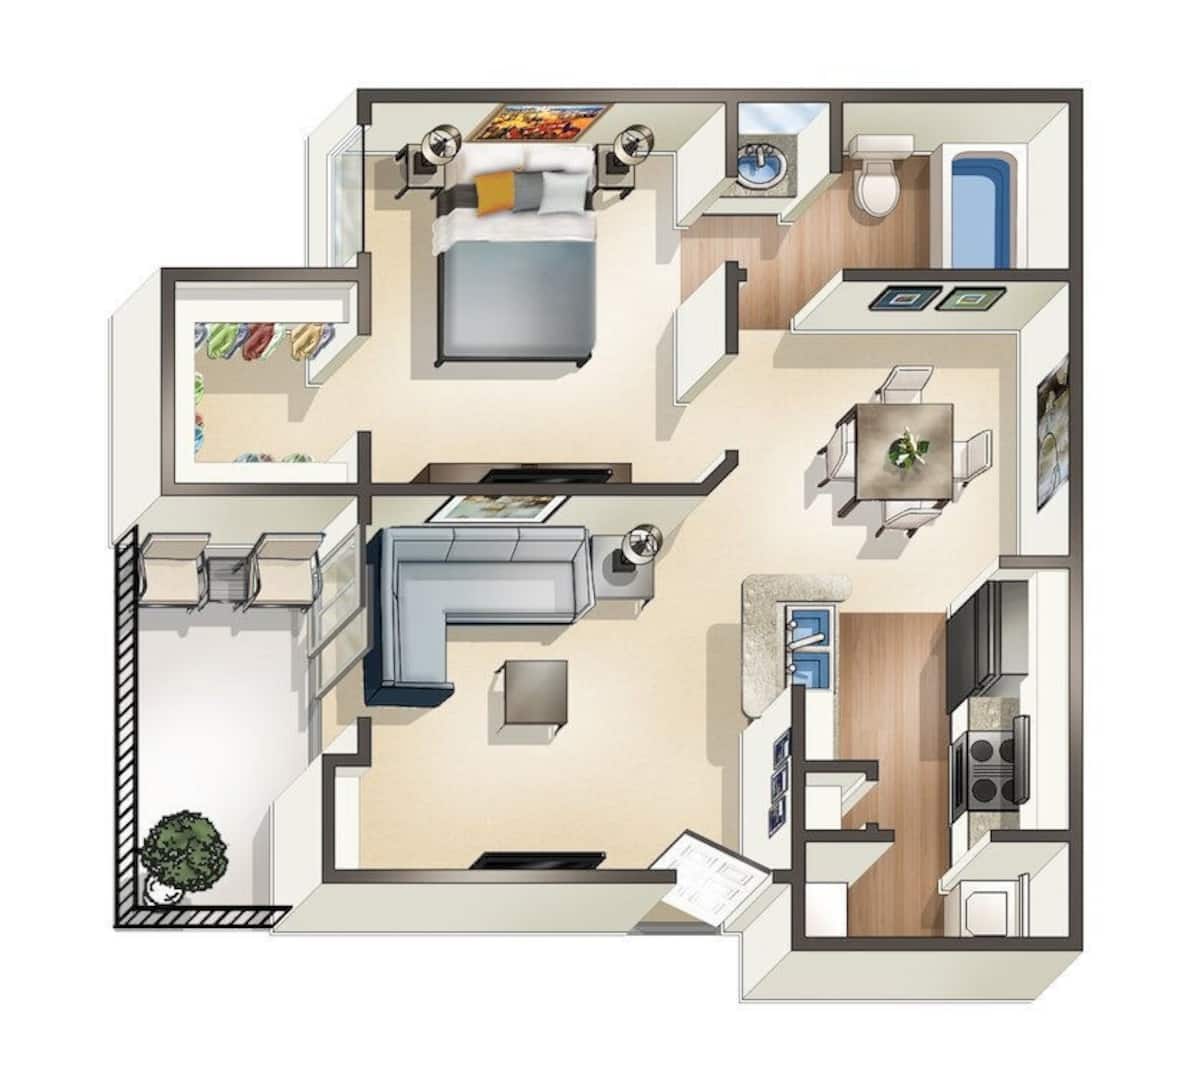 Floorplan diagram for A1B - R2, showing 1 bedroom